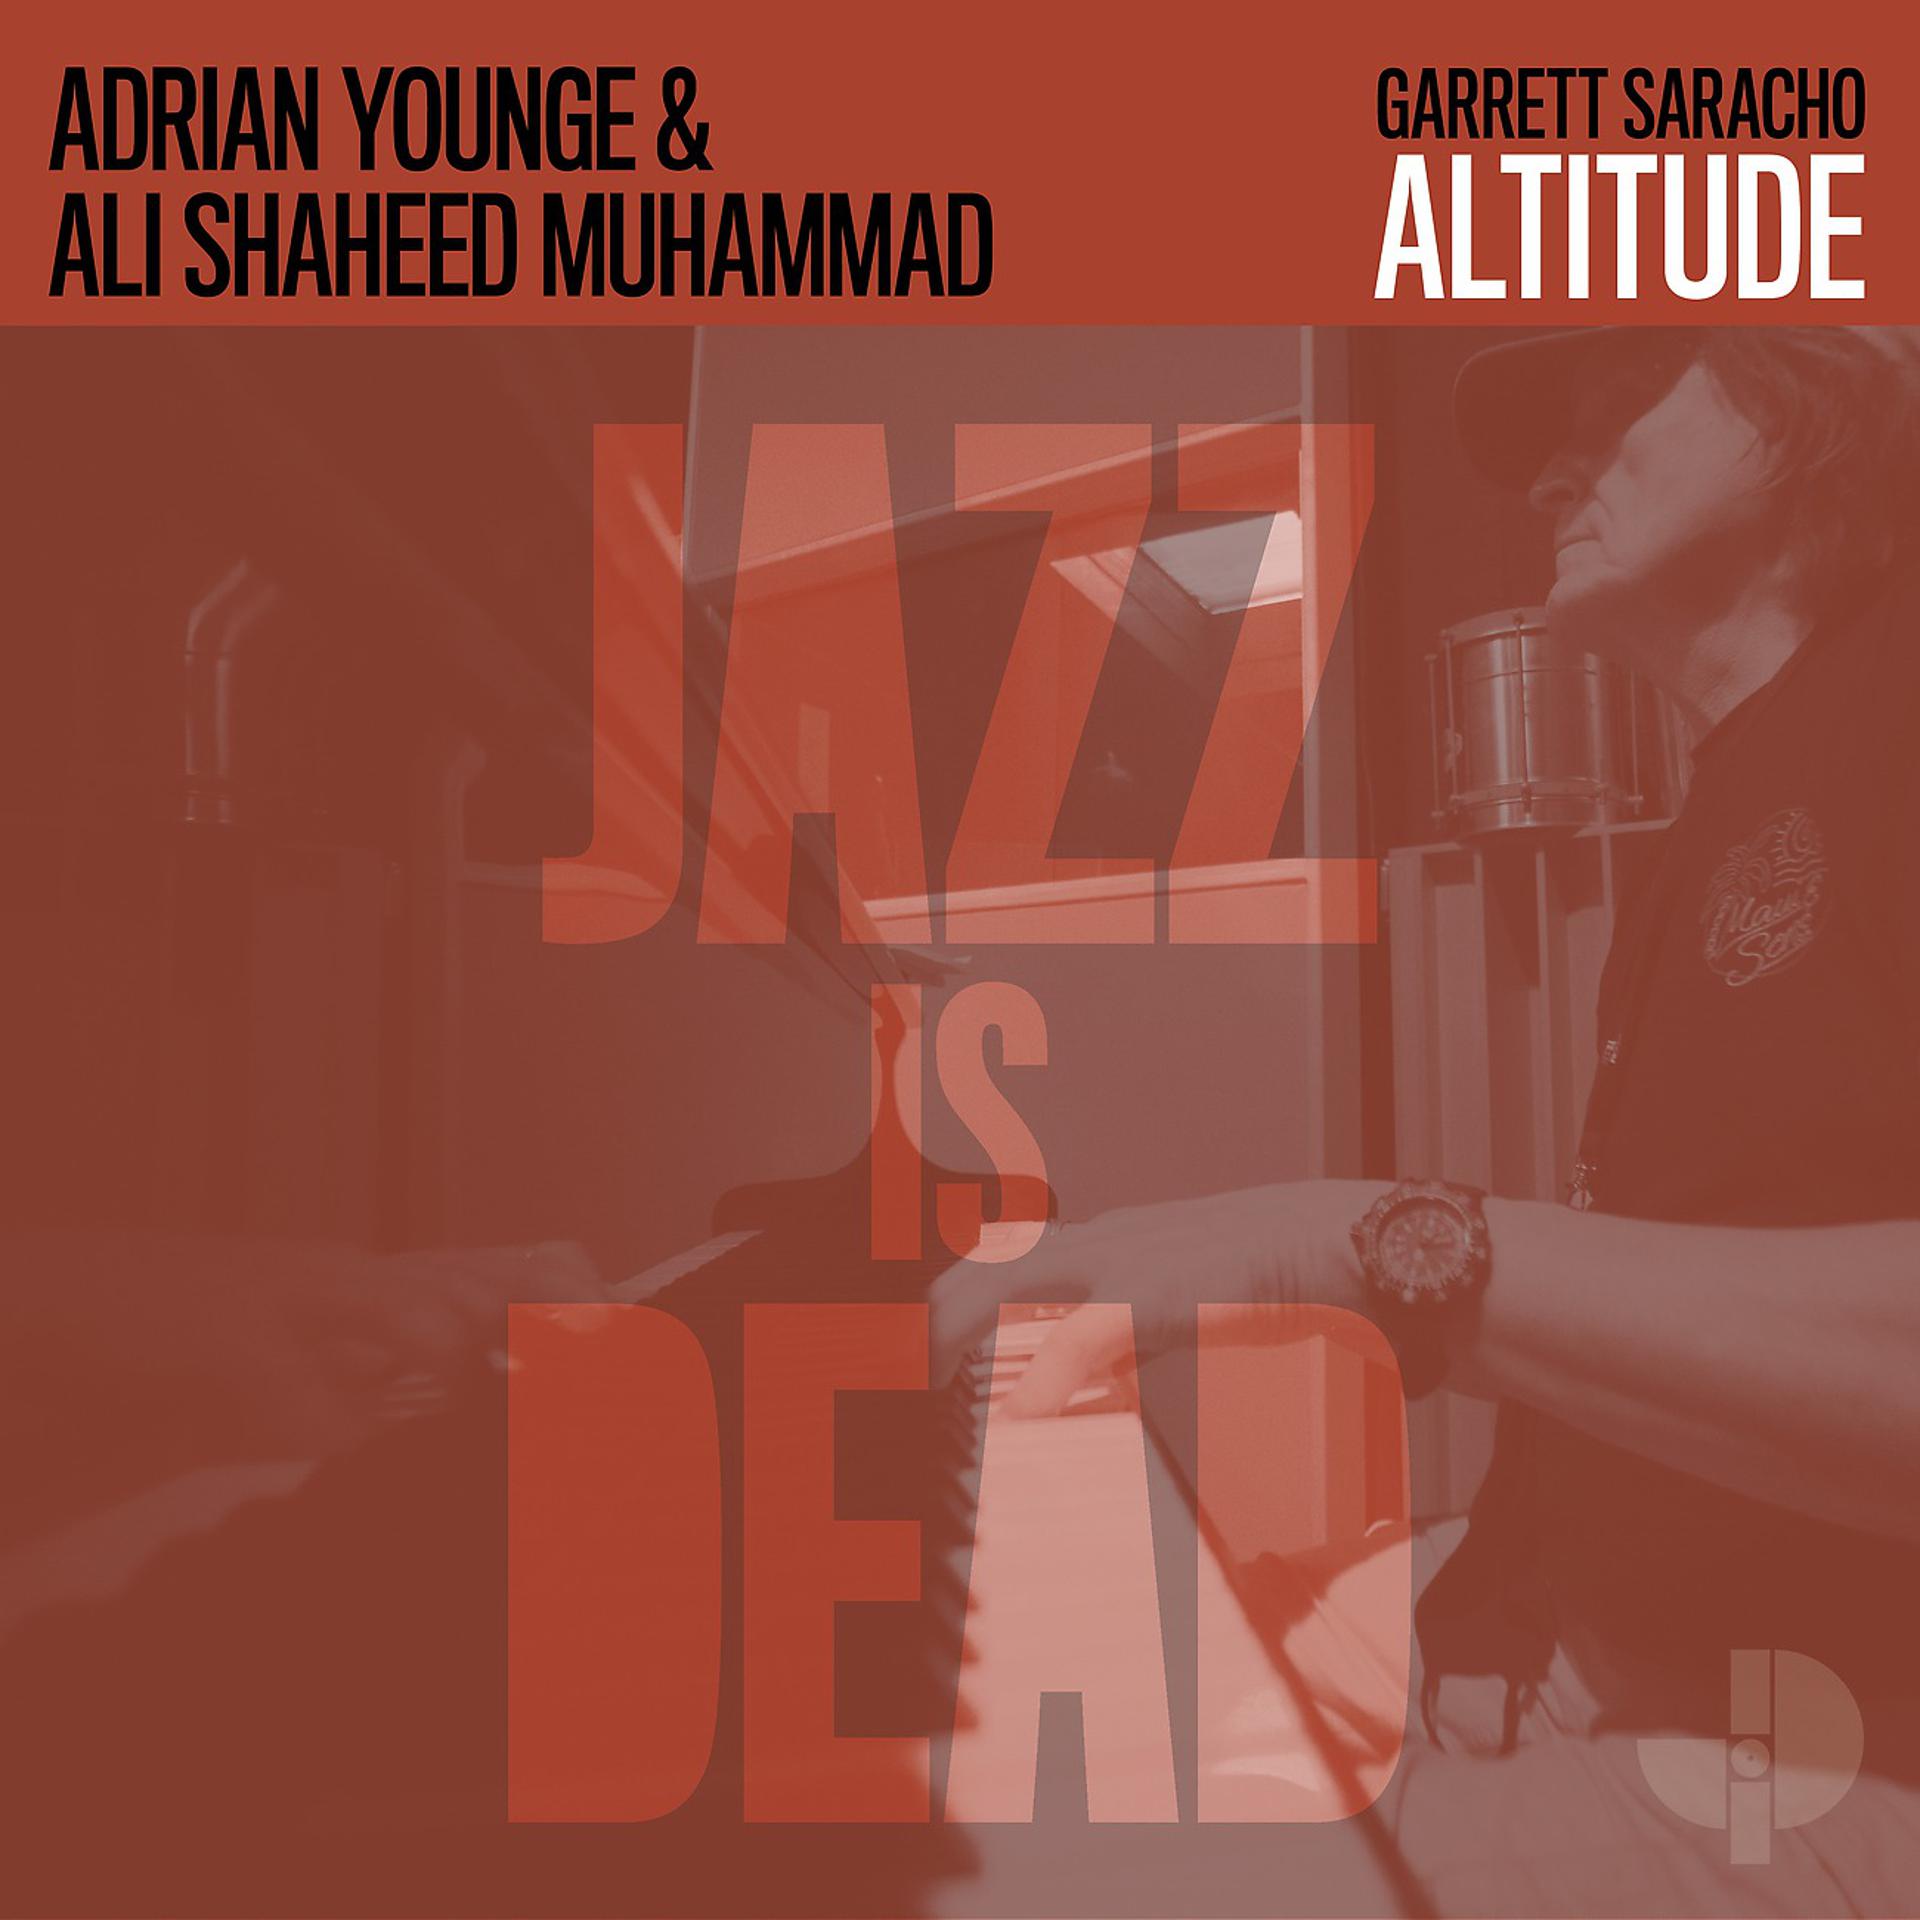 Постер к треку Garrett Saracho, Adrian Younge, Ali Shaheed Muhammad - Altitude